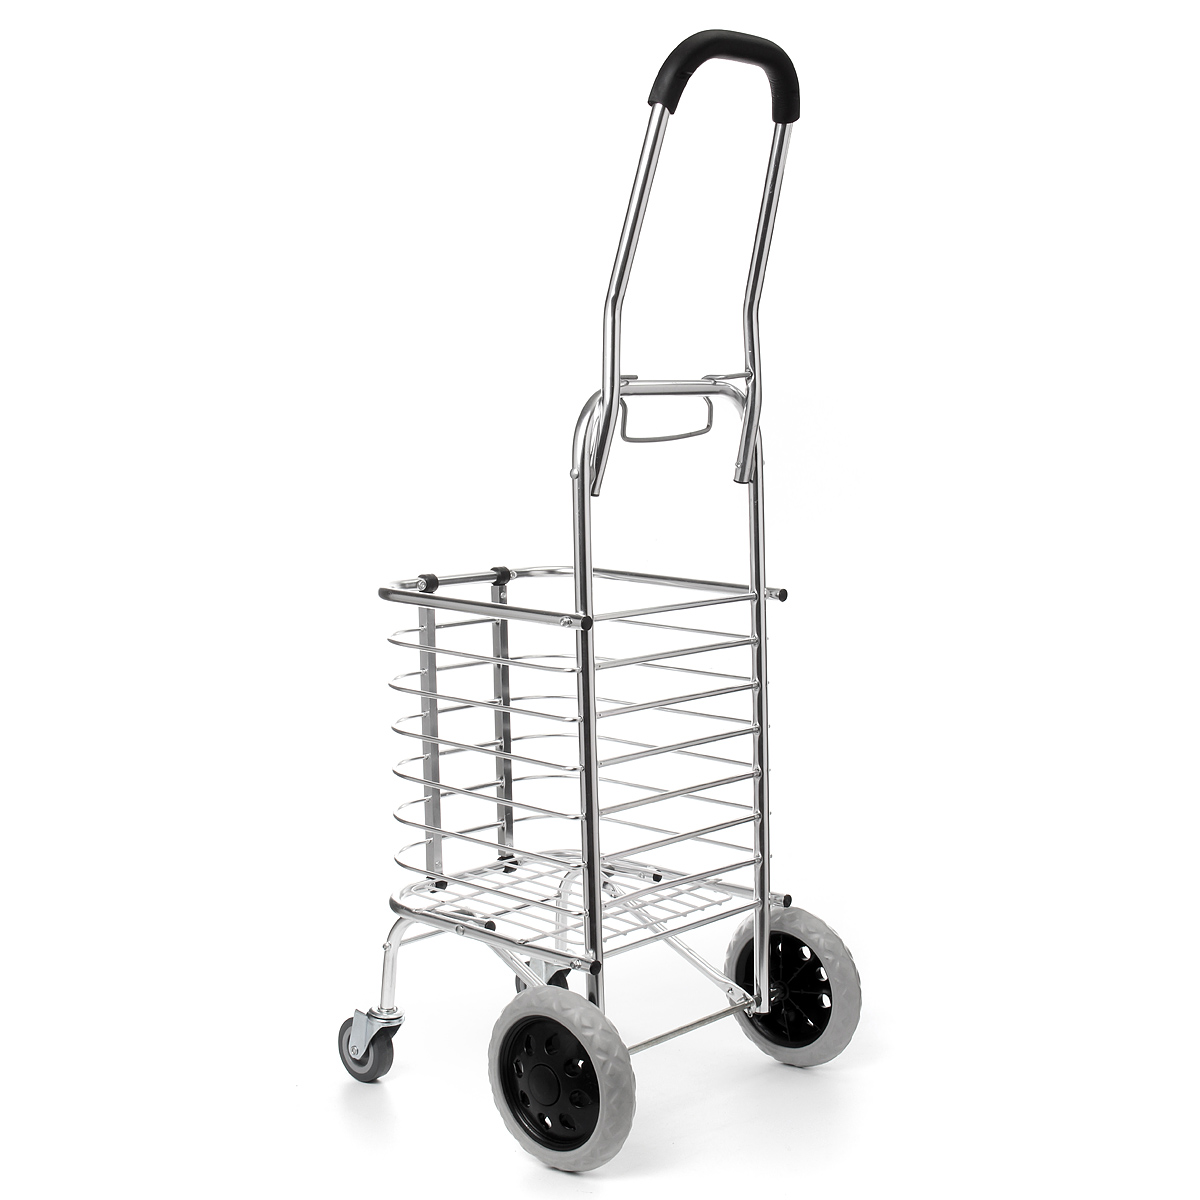 Folding-Portable-Shopping-Basket-Cart-Trolley-Trailer-Four-Wheels-Aluminum-Alloy-Storage-Baskets-1395807